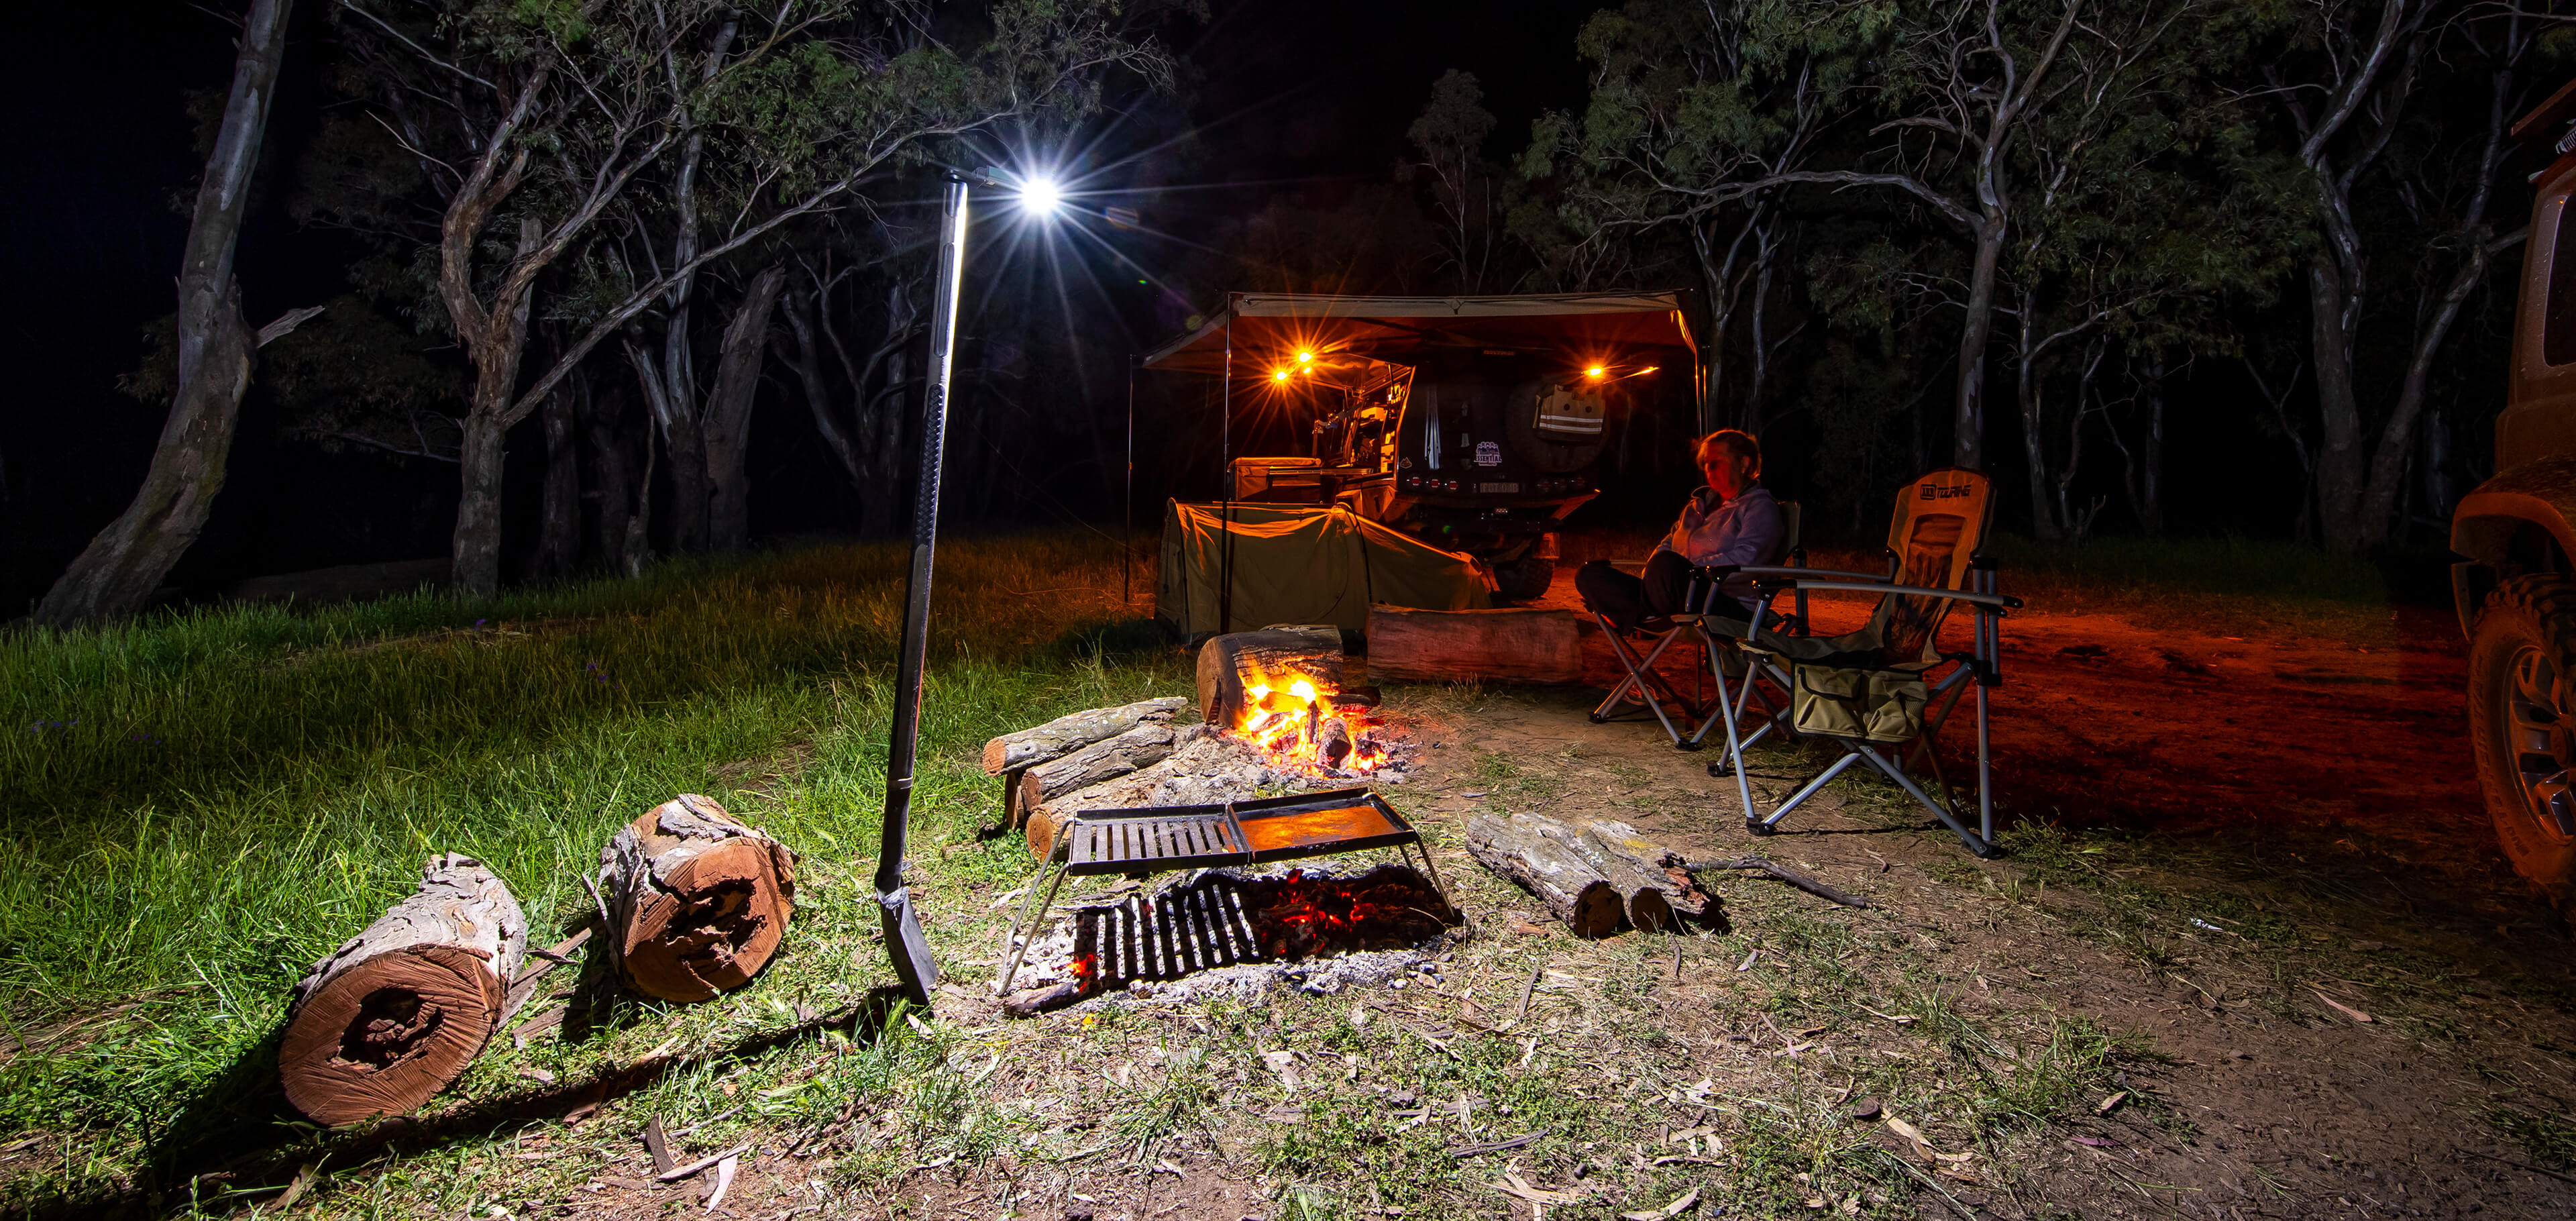 Camping & Touring LED Strip Lights